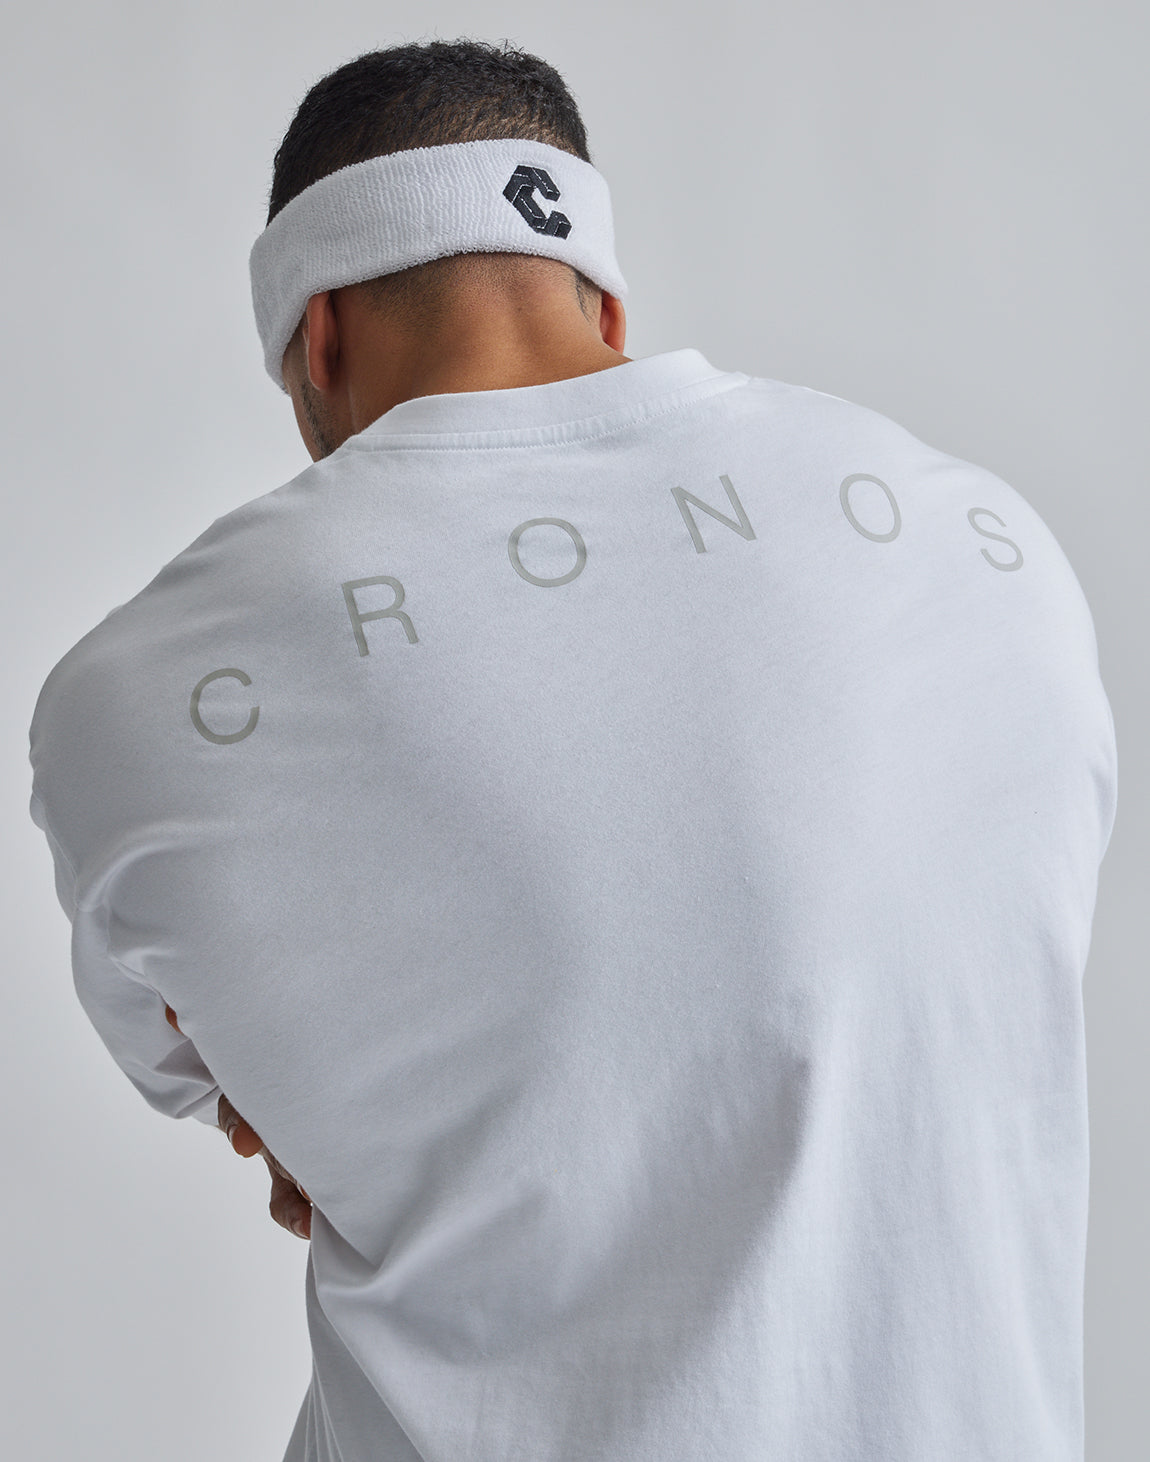 CRONOS SIGNATURE LOGO OVERSIZE T-SHIRTS – クロノス CRONOS Official 